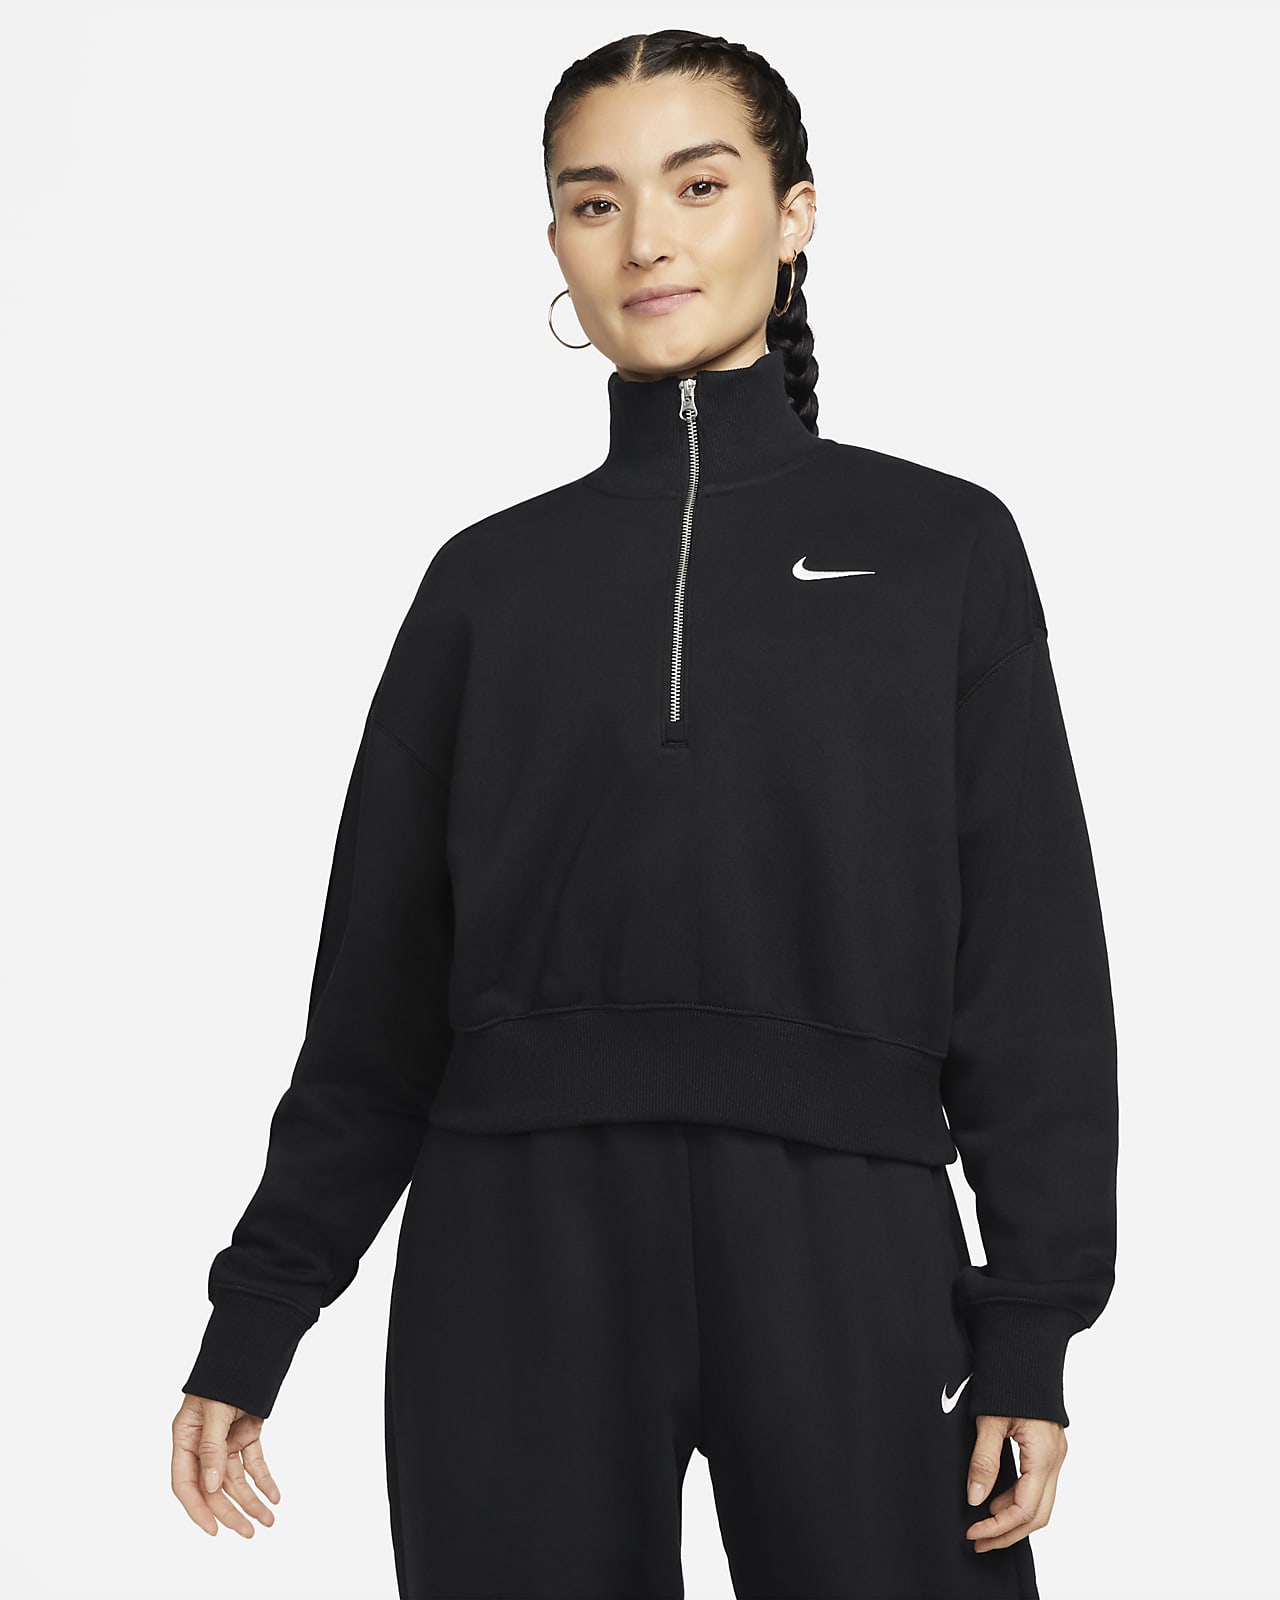 Sweatshirt recortada com fecho até meio Nike Sportswear Phoenix Fleece para mulher